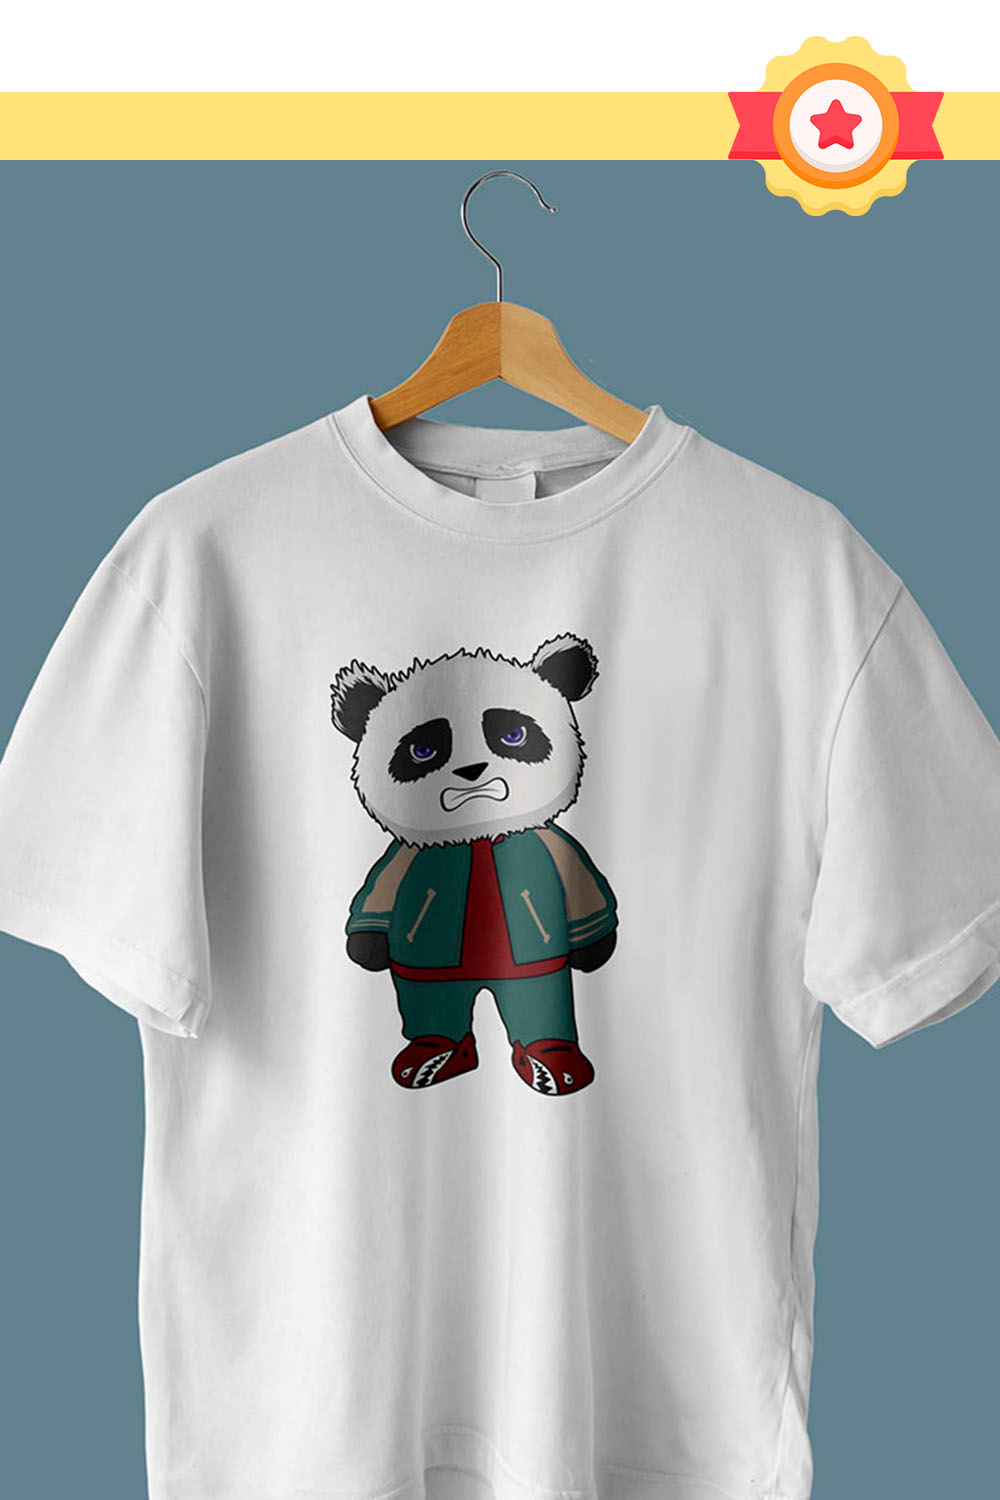 Cool Panda Illustration T-Shirt Design Pinterest image.